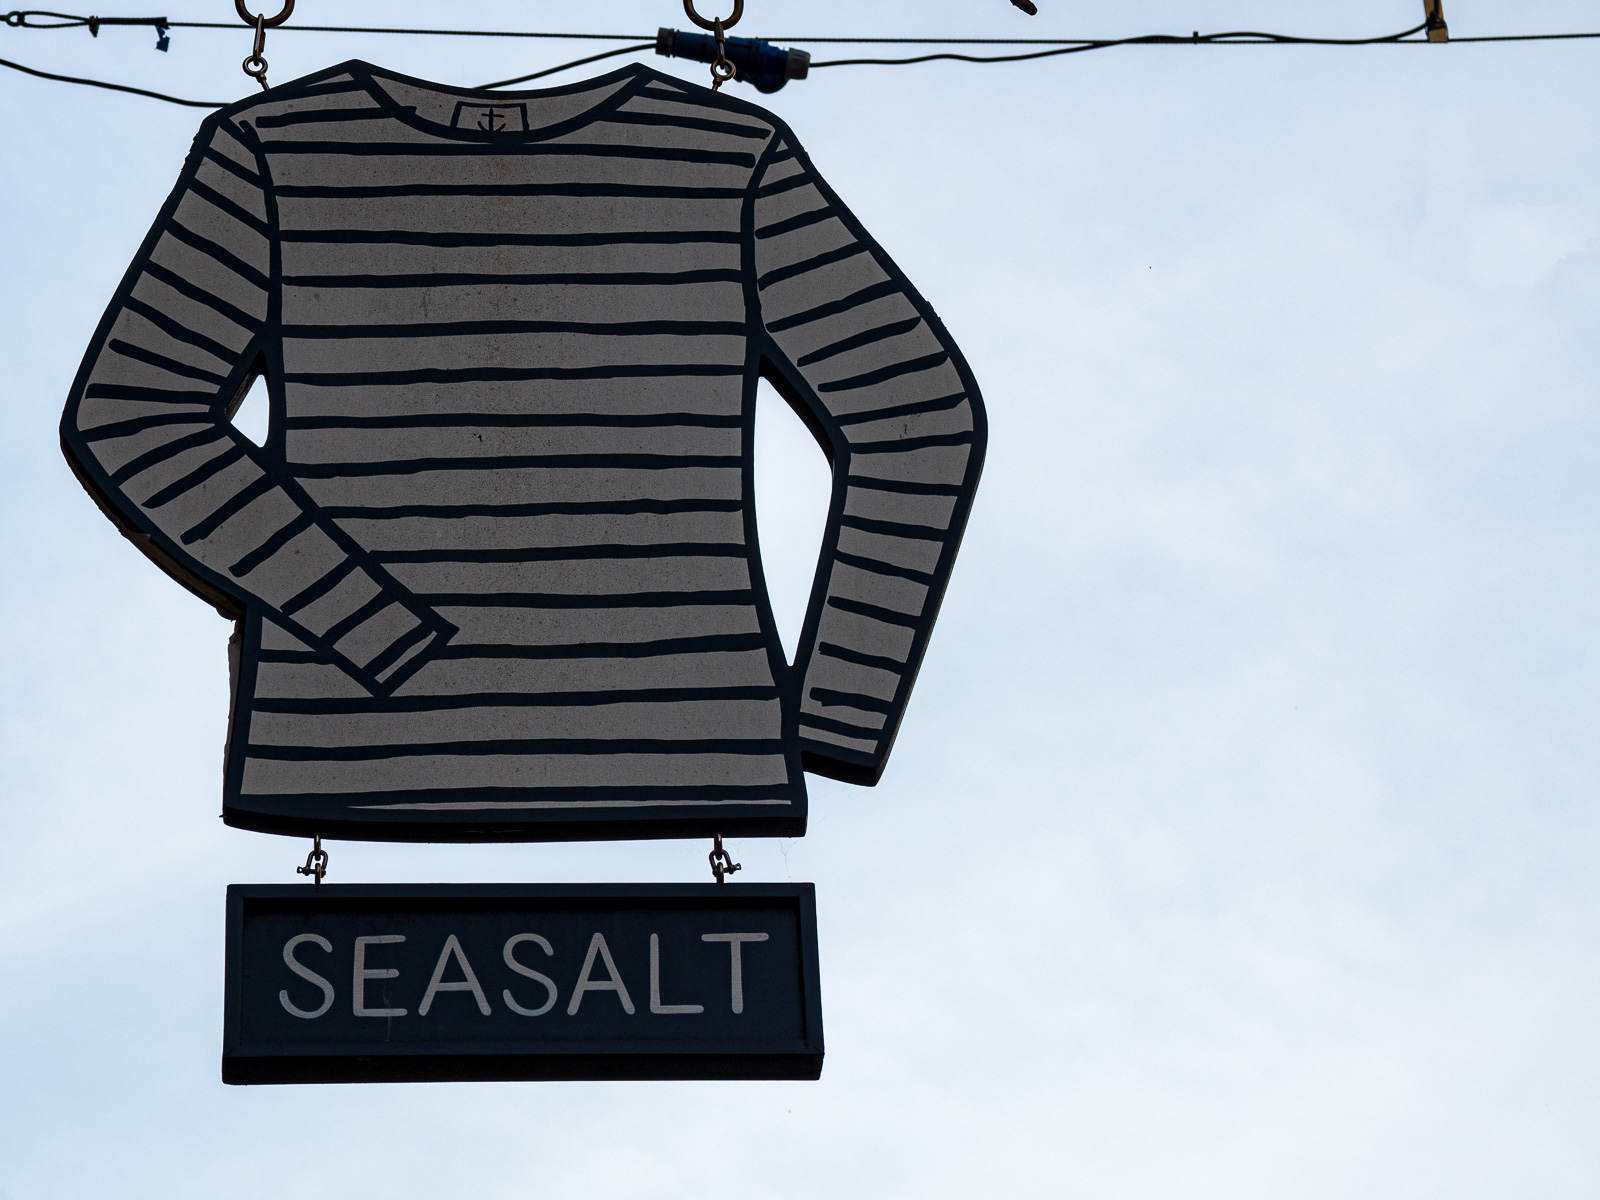 Seasalt Shop Sign, Alex Davidson